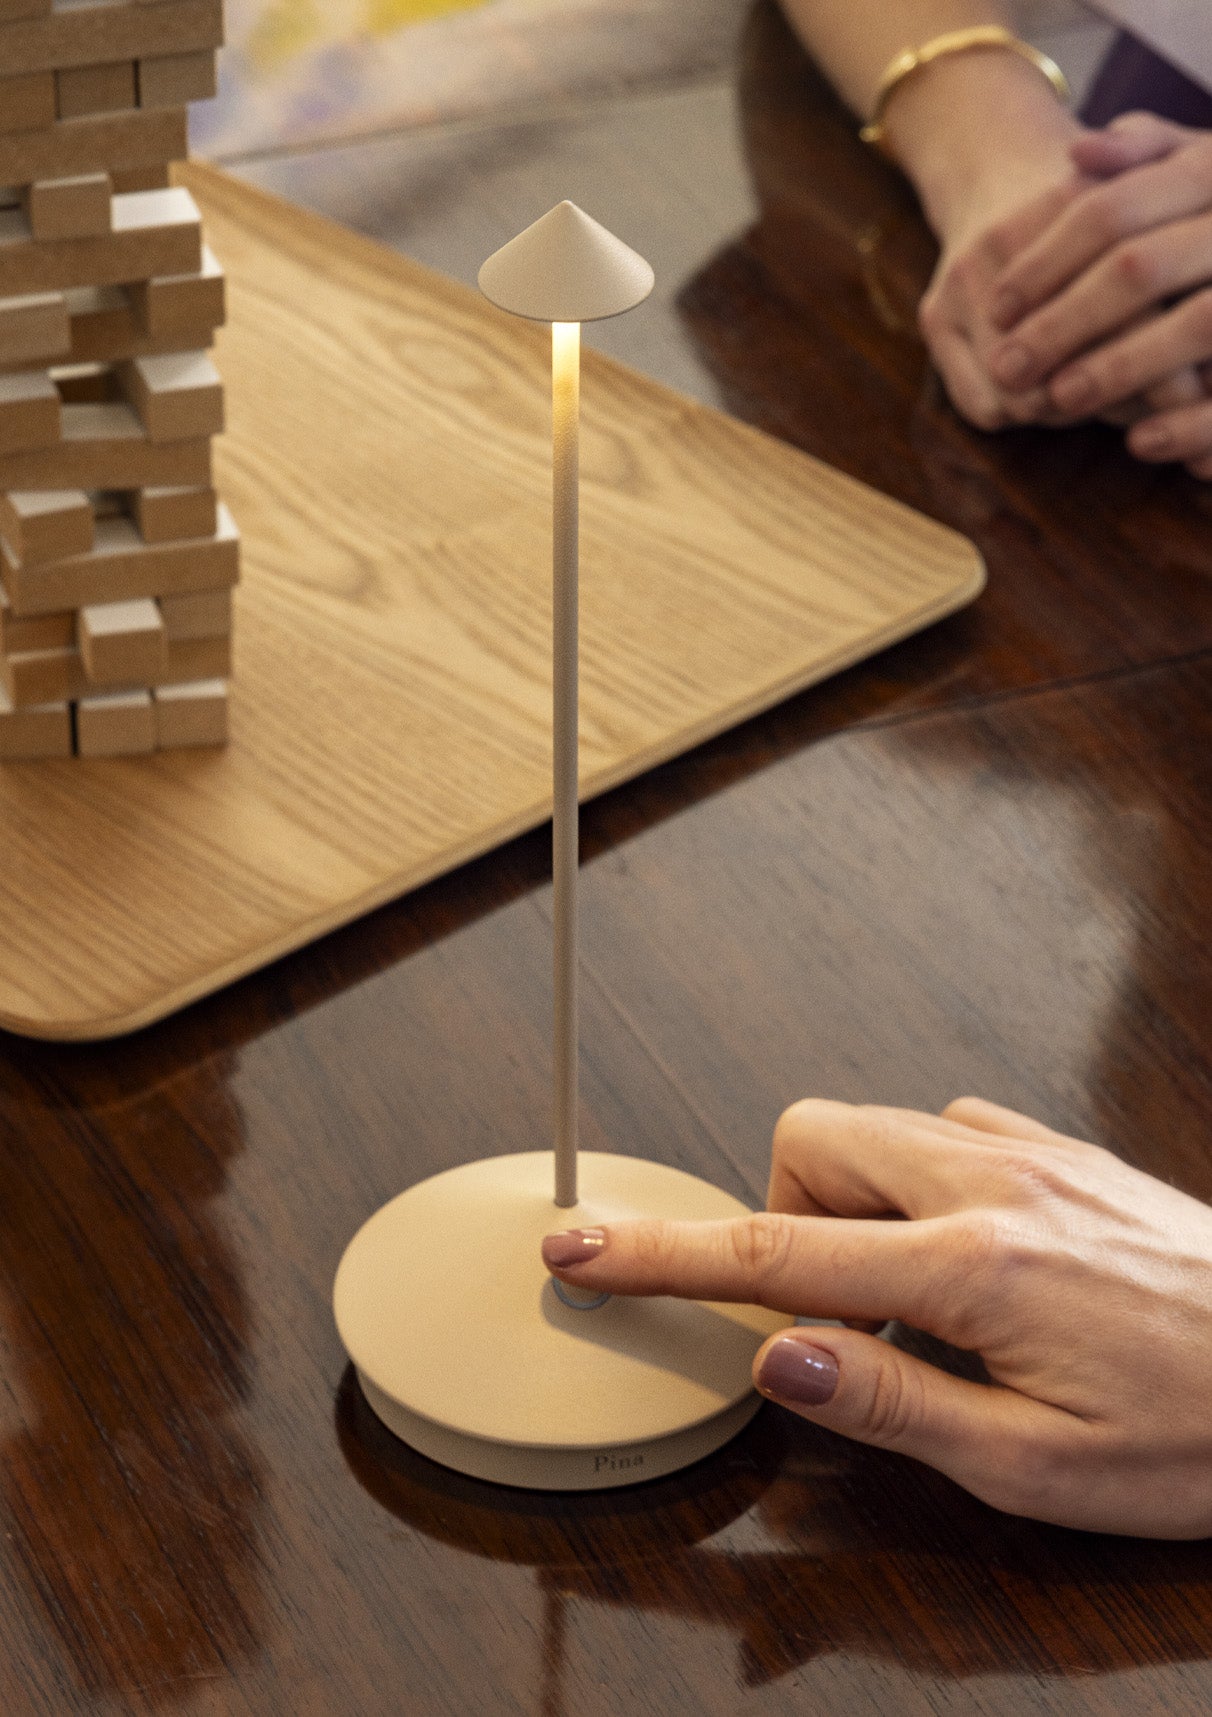 Pina Pro Table Lamp | Sand